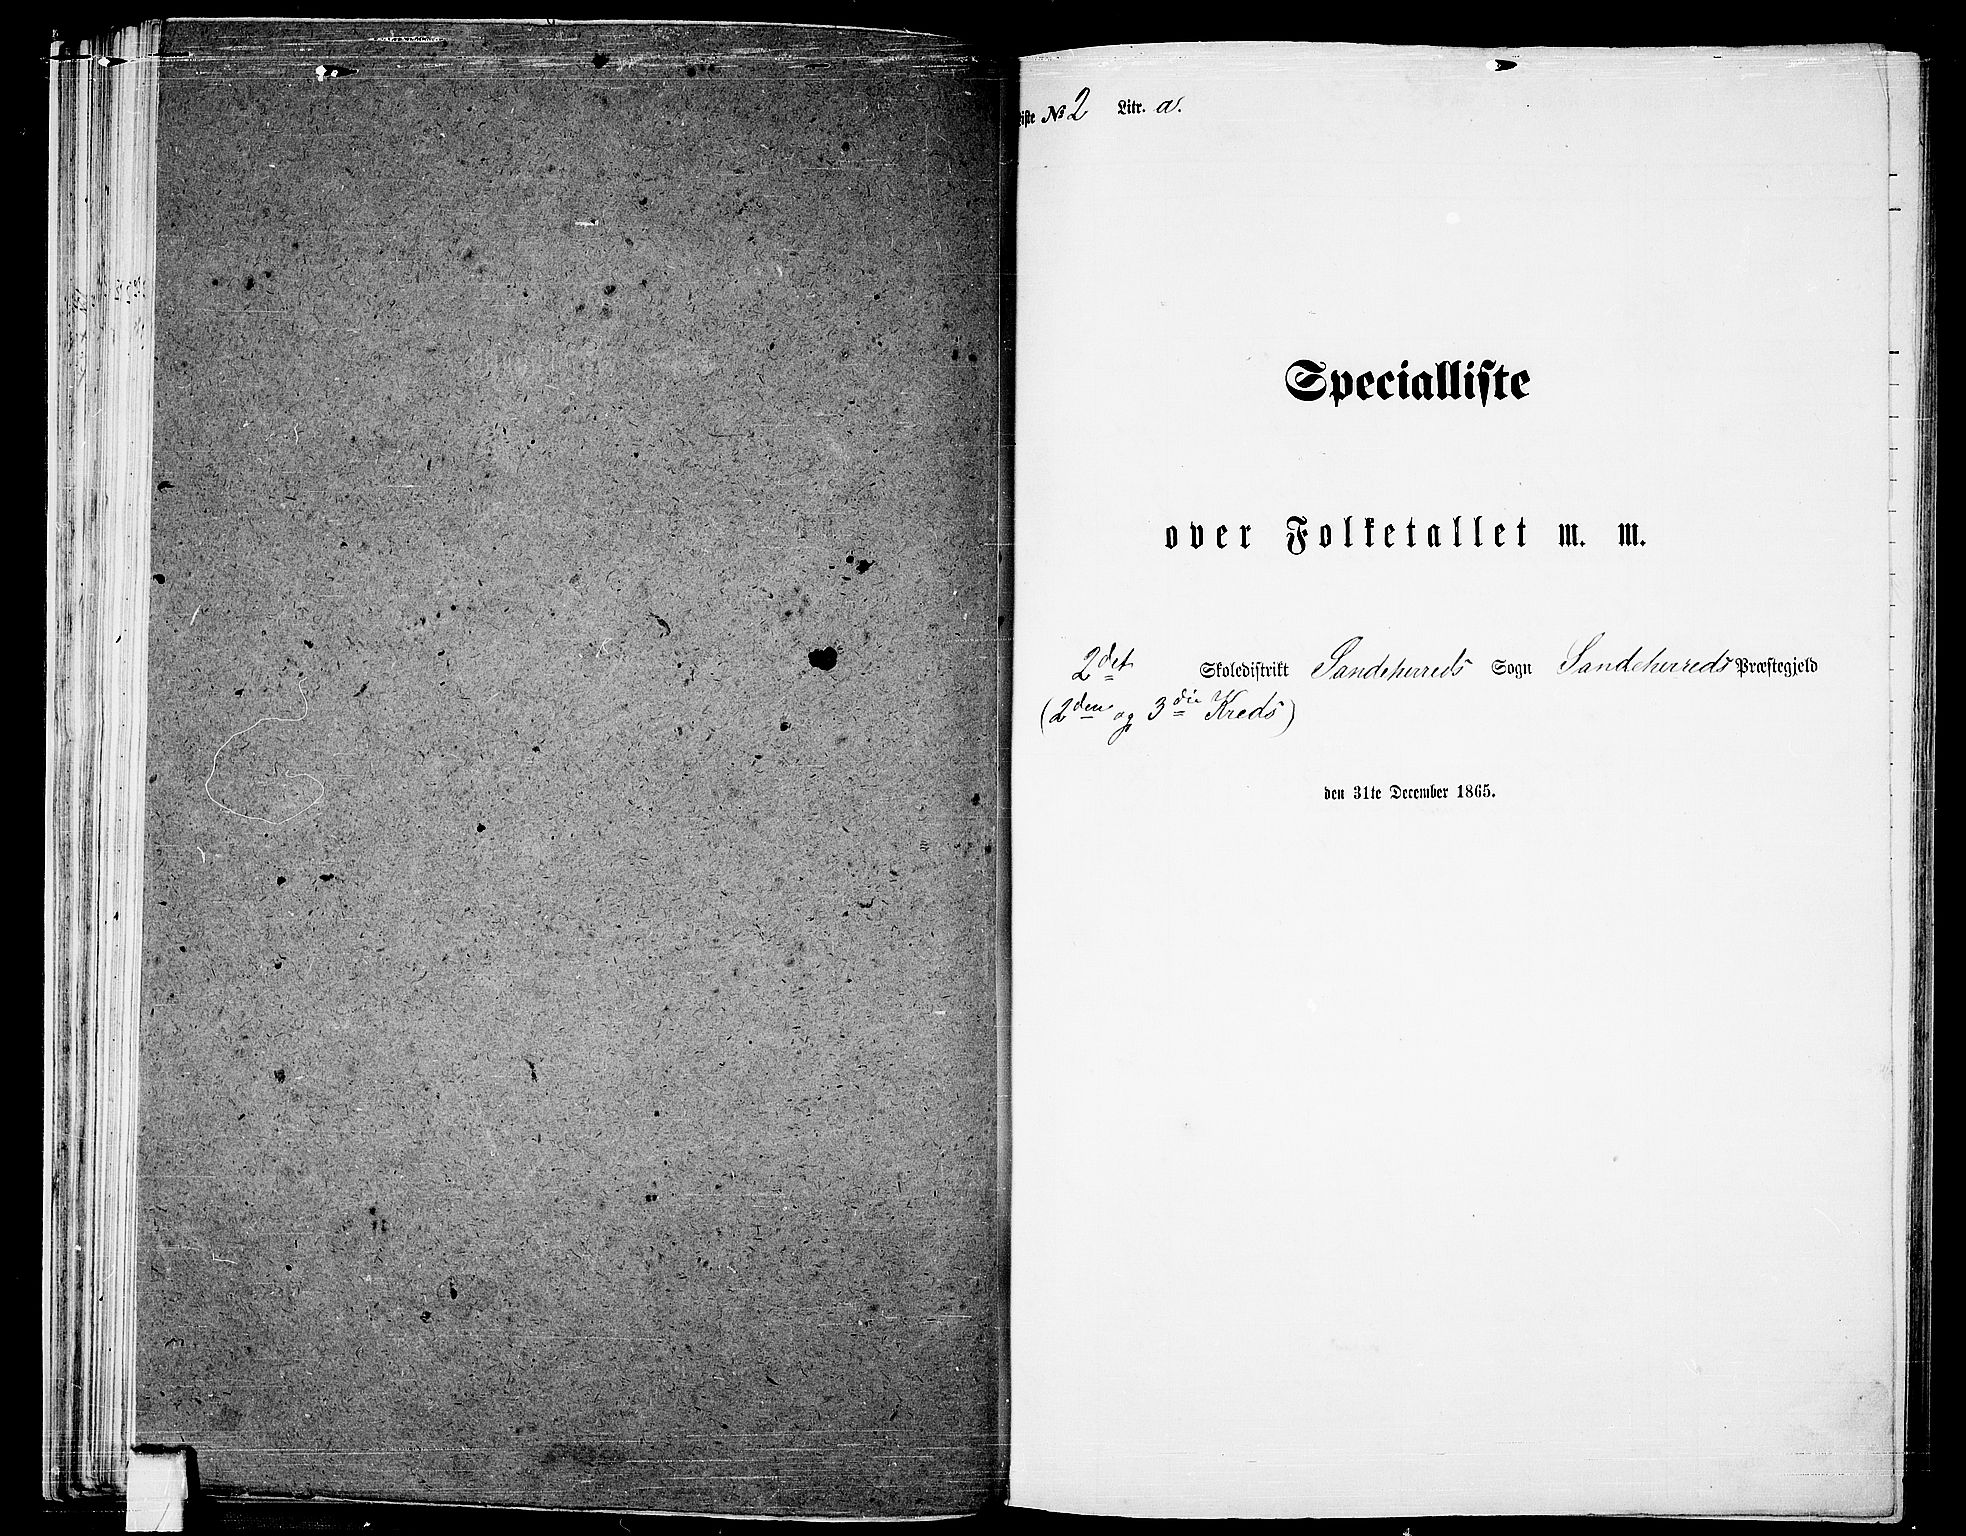 RA, Folketelling 1865 for 0724L Sandeherred prestegjeld, Sandeherred sokn, 1865, s. 51